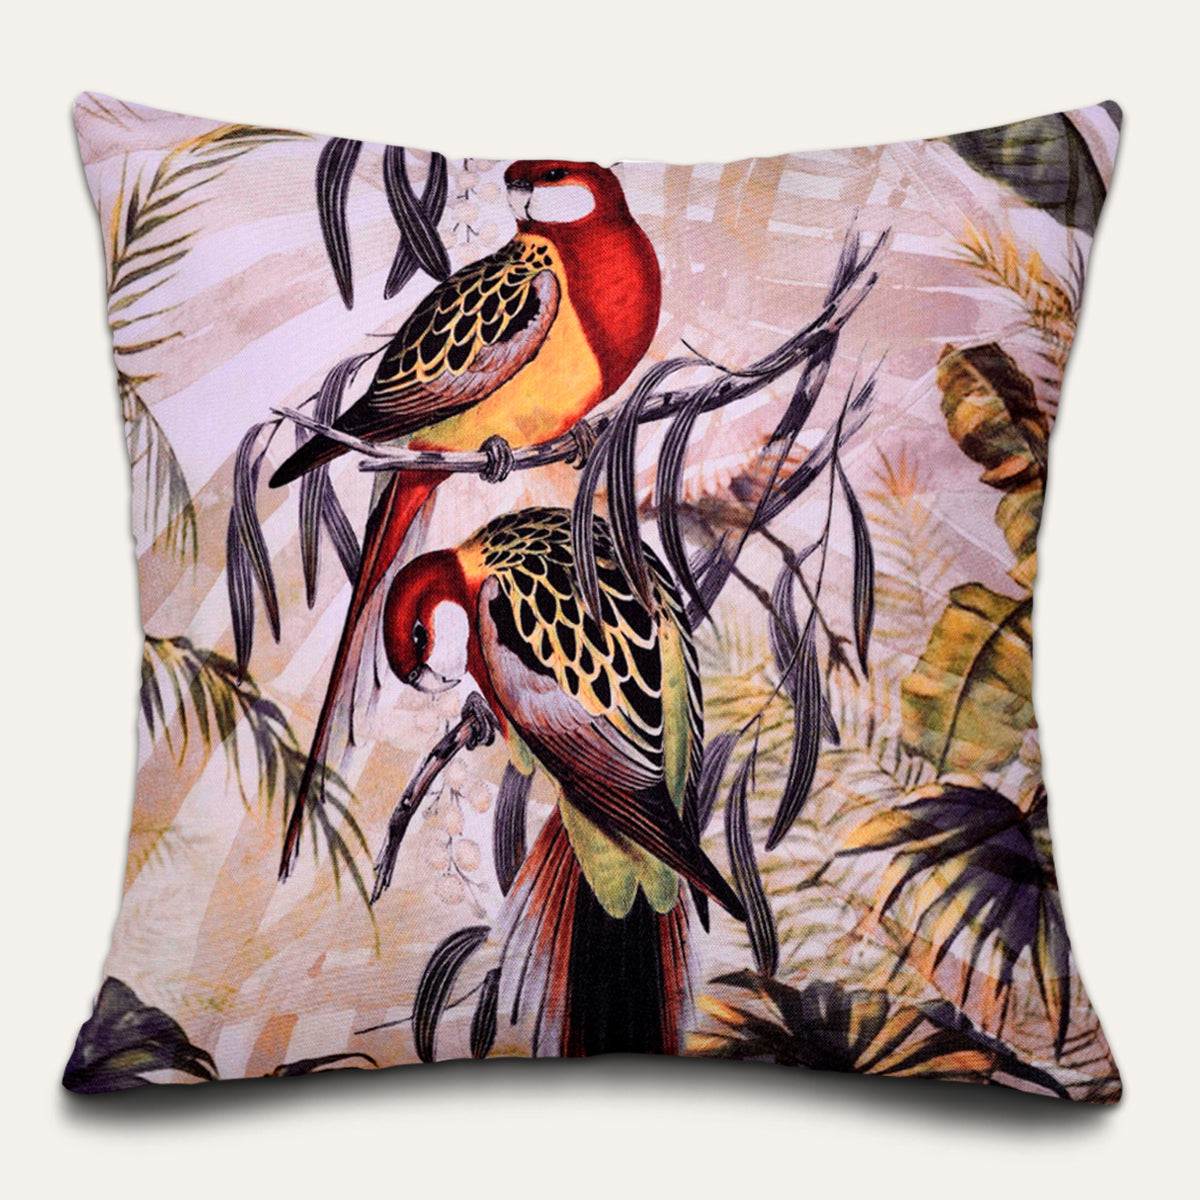 Birds Printed Design Throw Pillow Covers - Set of 4 - Decozen